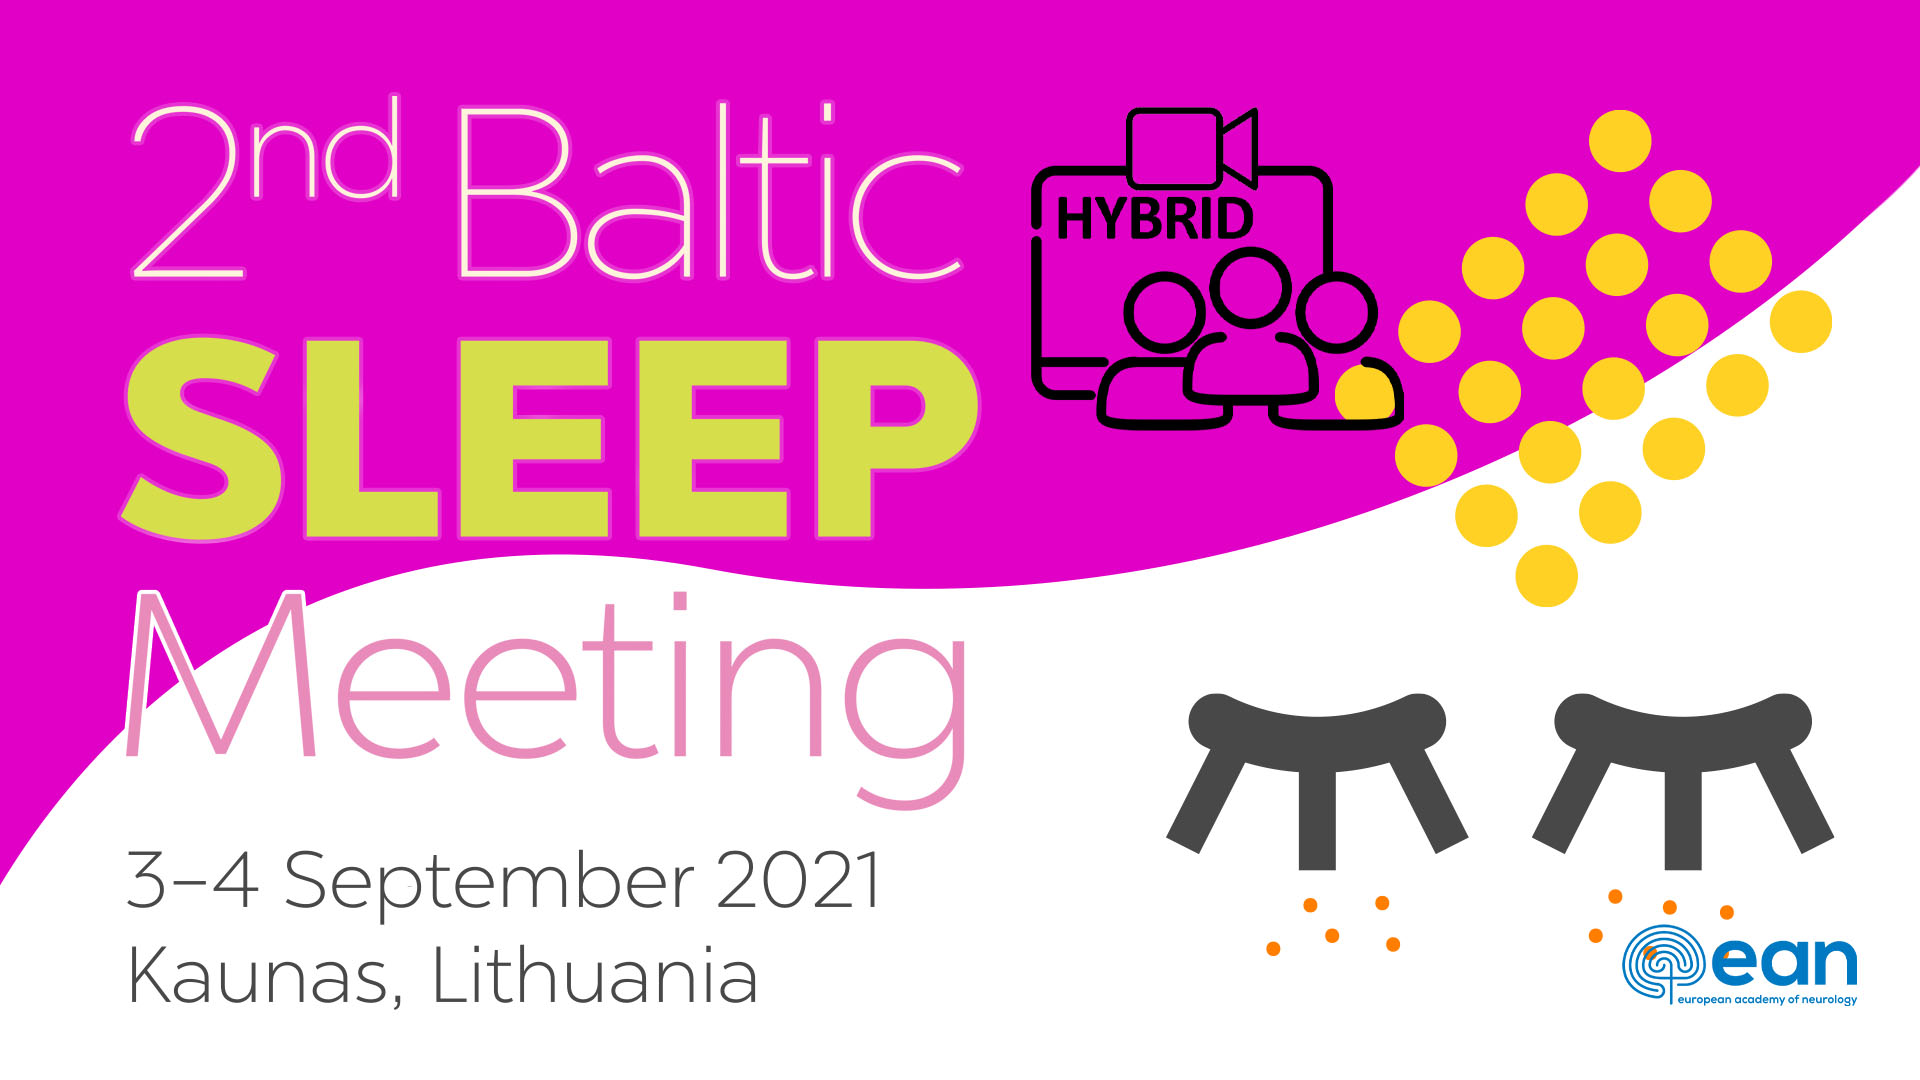 2nd Baltic Sleep Meeting